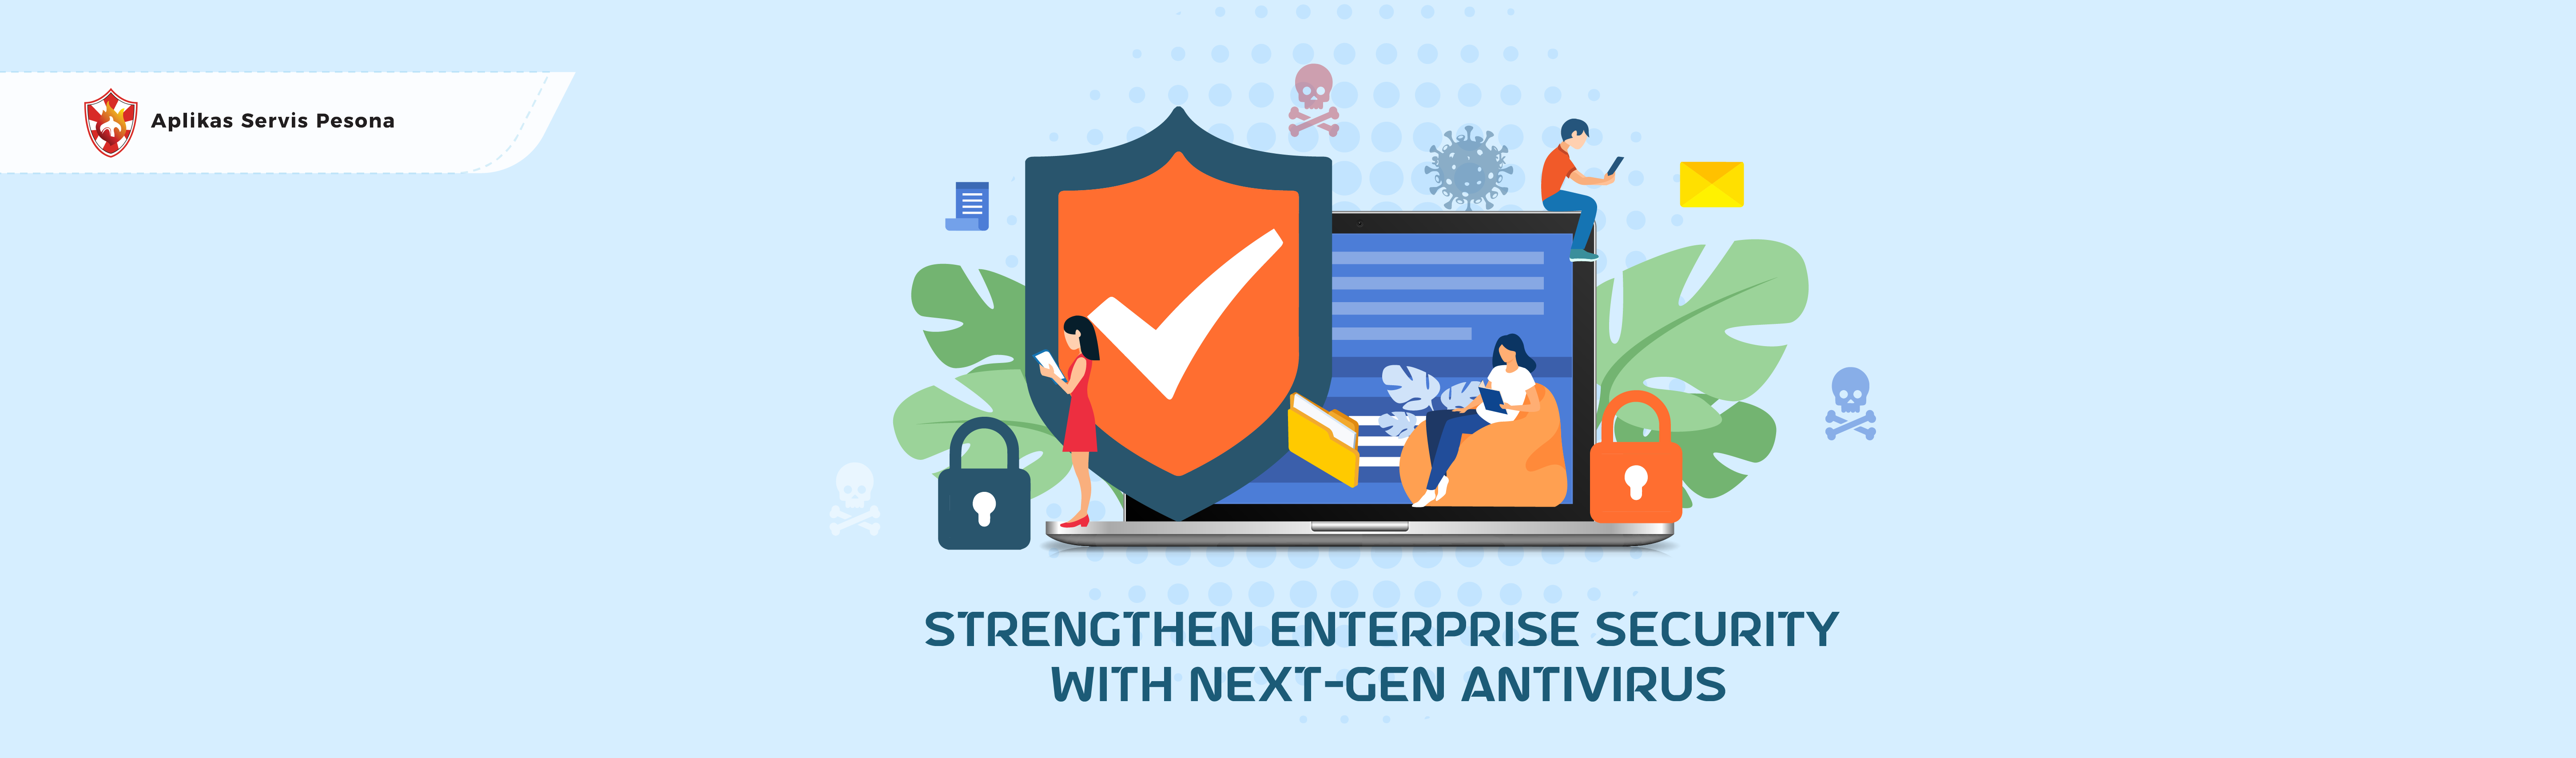 Strengthen Enterprise Security with Next-Gen Antivirus